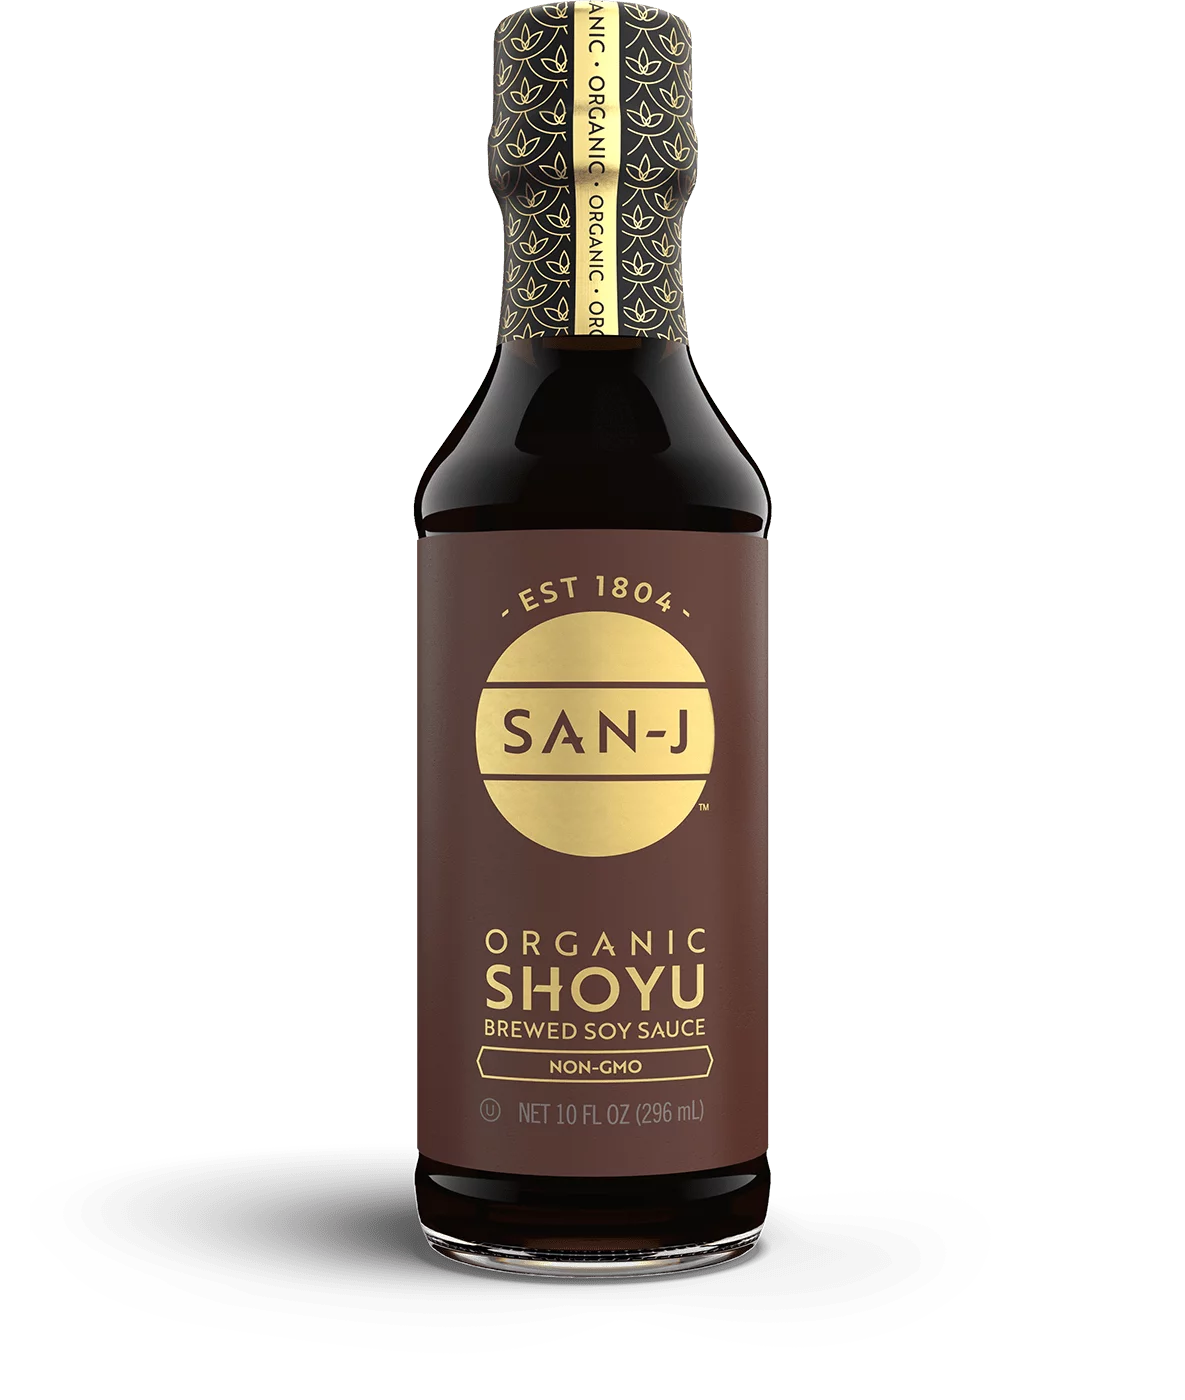 Details about   5gal Organic Shoyu naturally brewed soy sauce san-J 